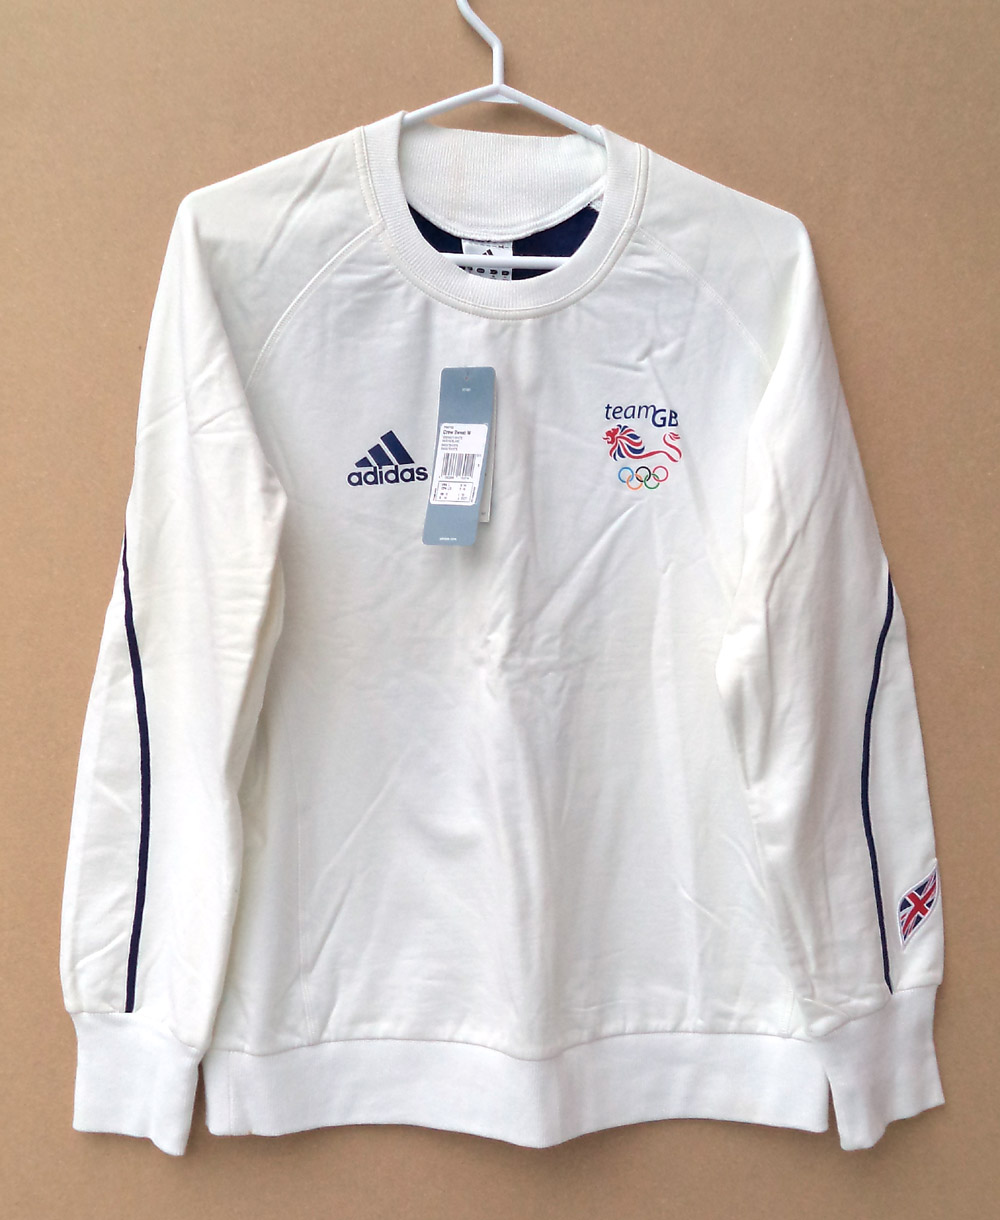 New Adidas Team GB Olympics Crew Neck Sweatshirt